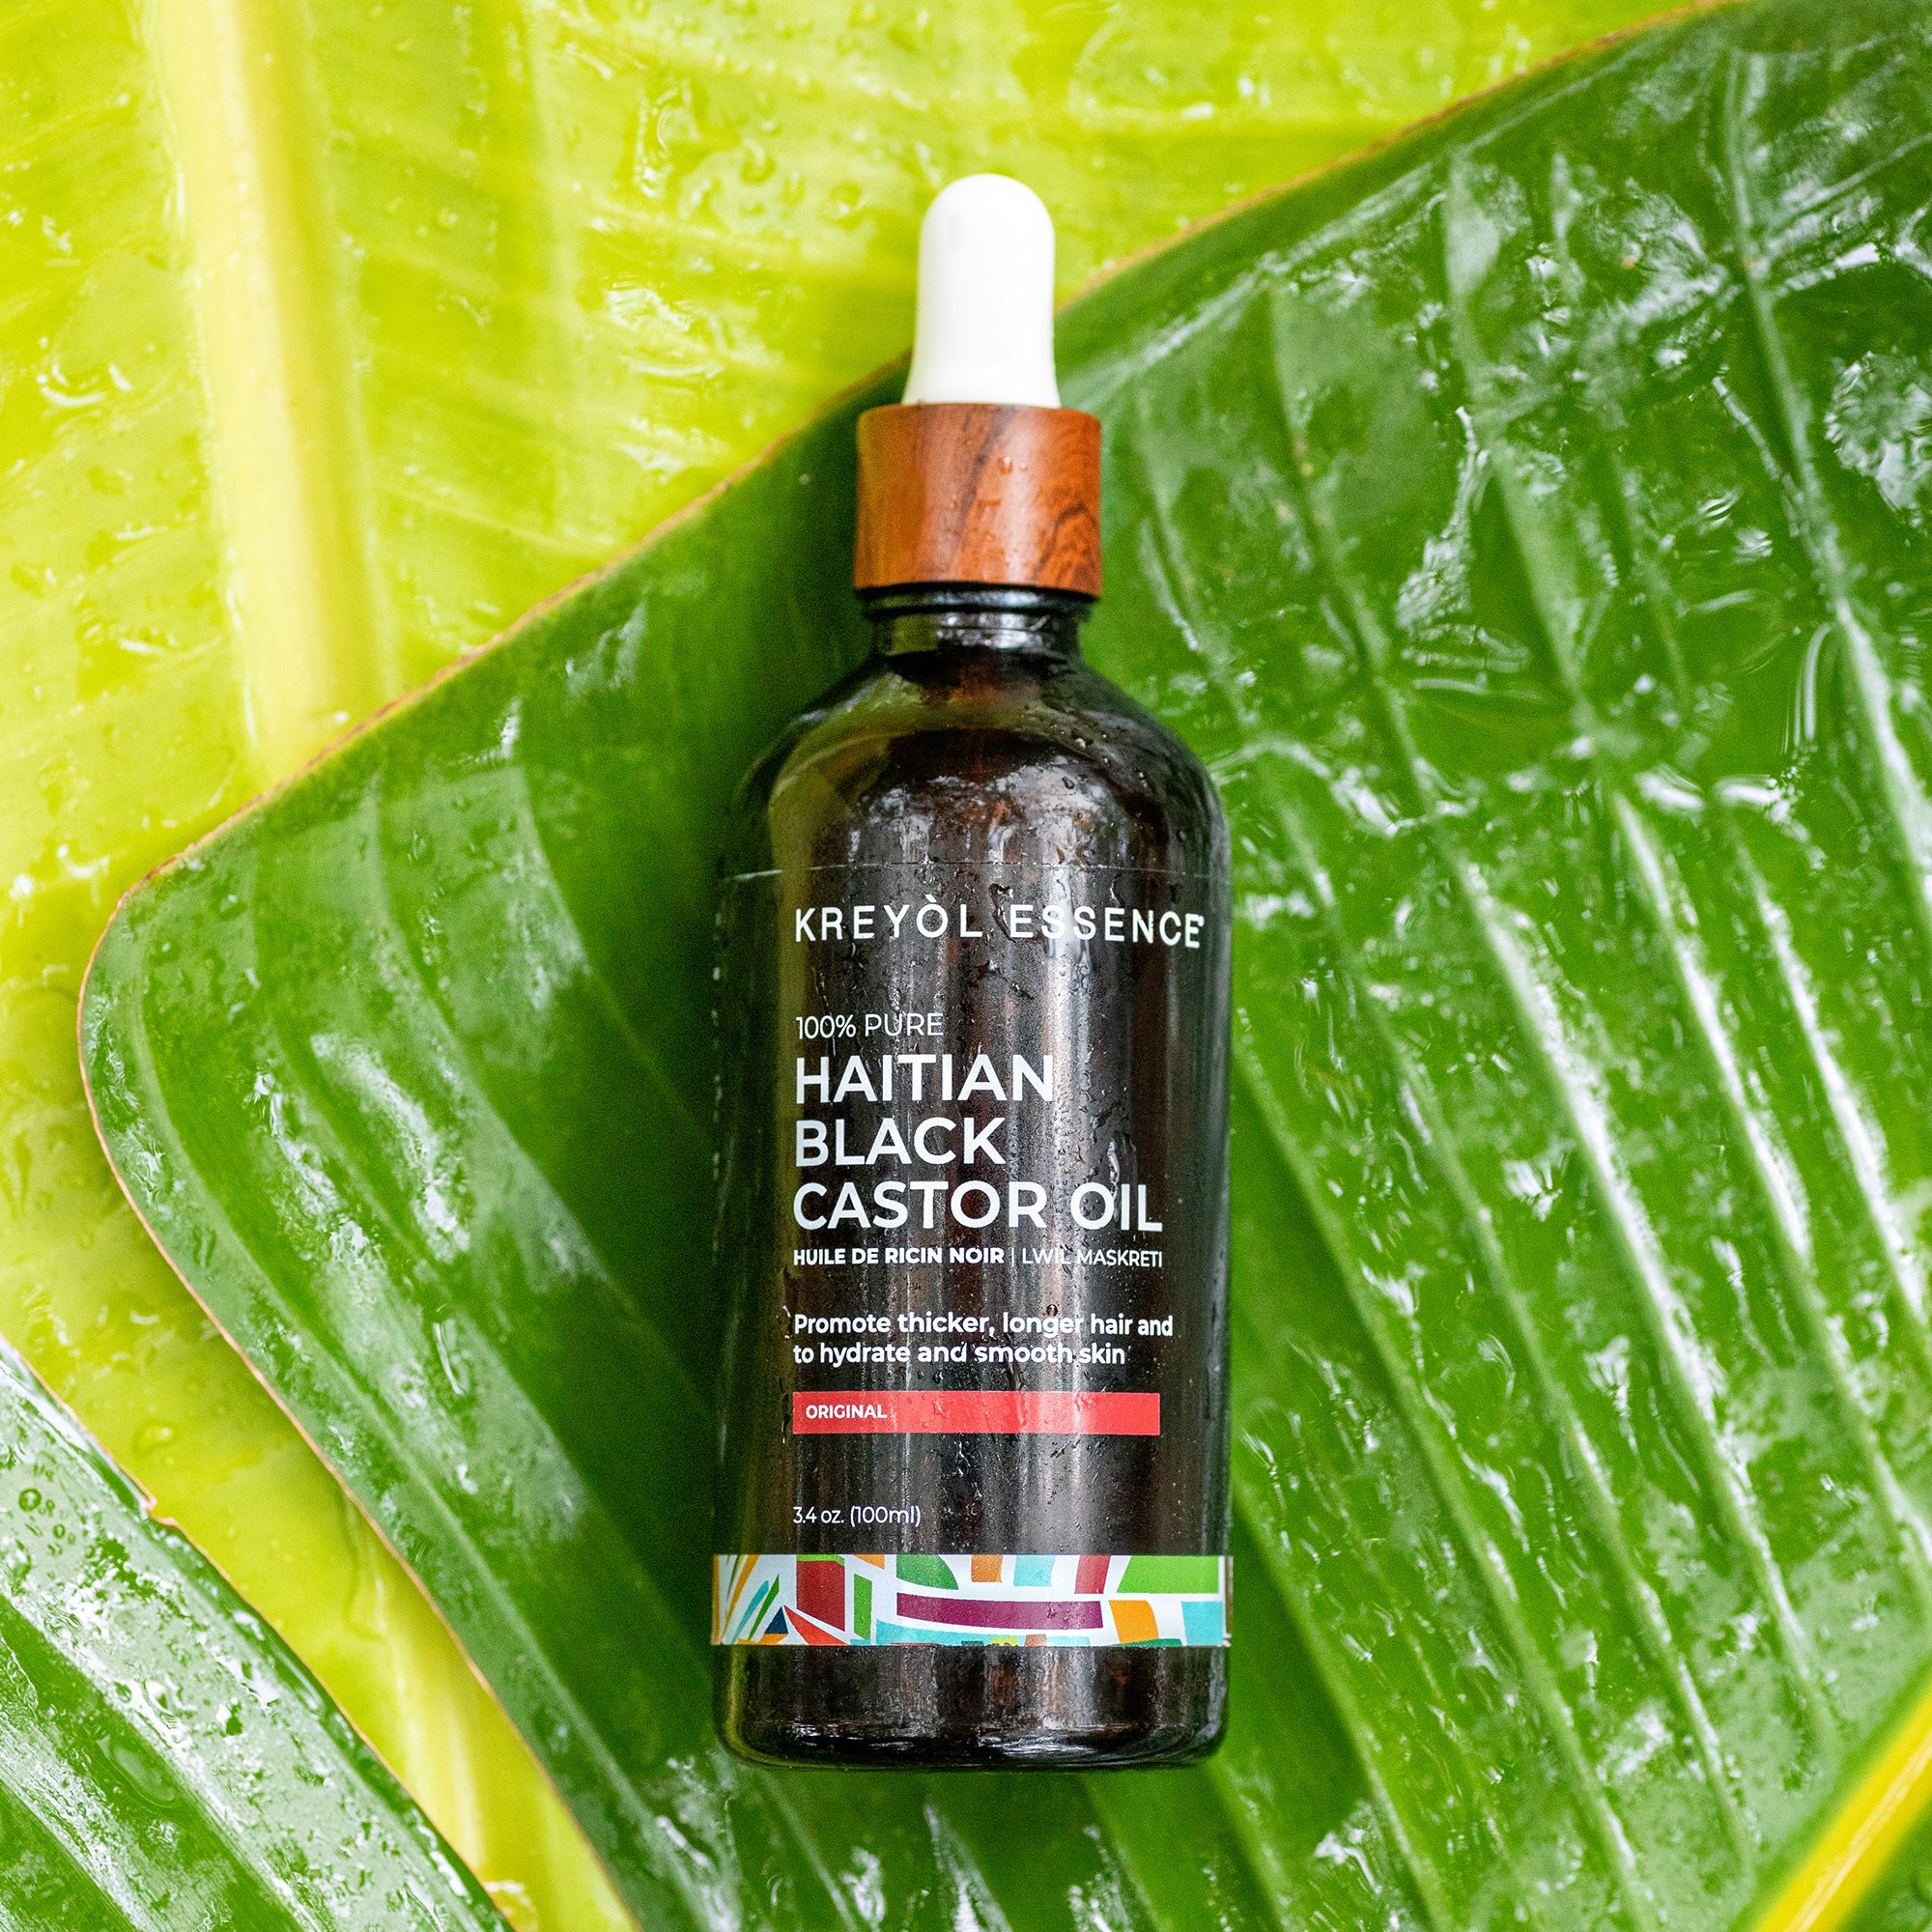 Haitian Black Castor Oil: Original (3.4oz) Super Size